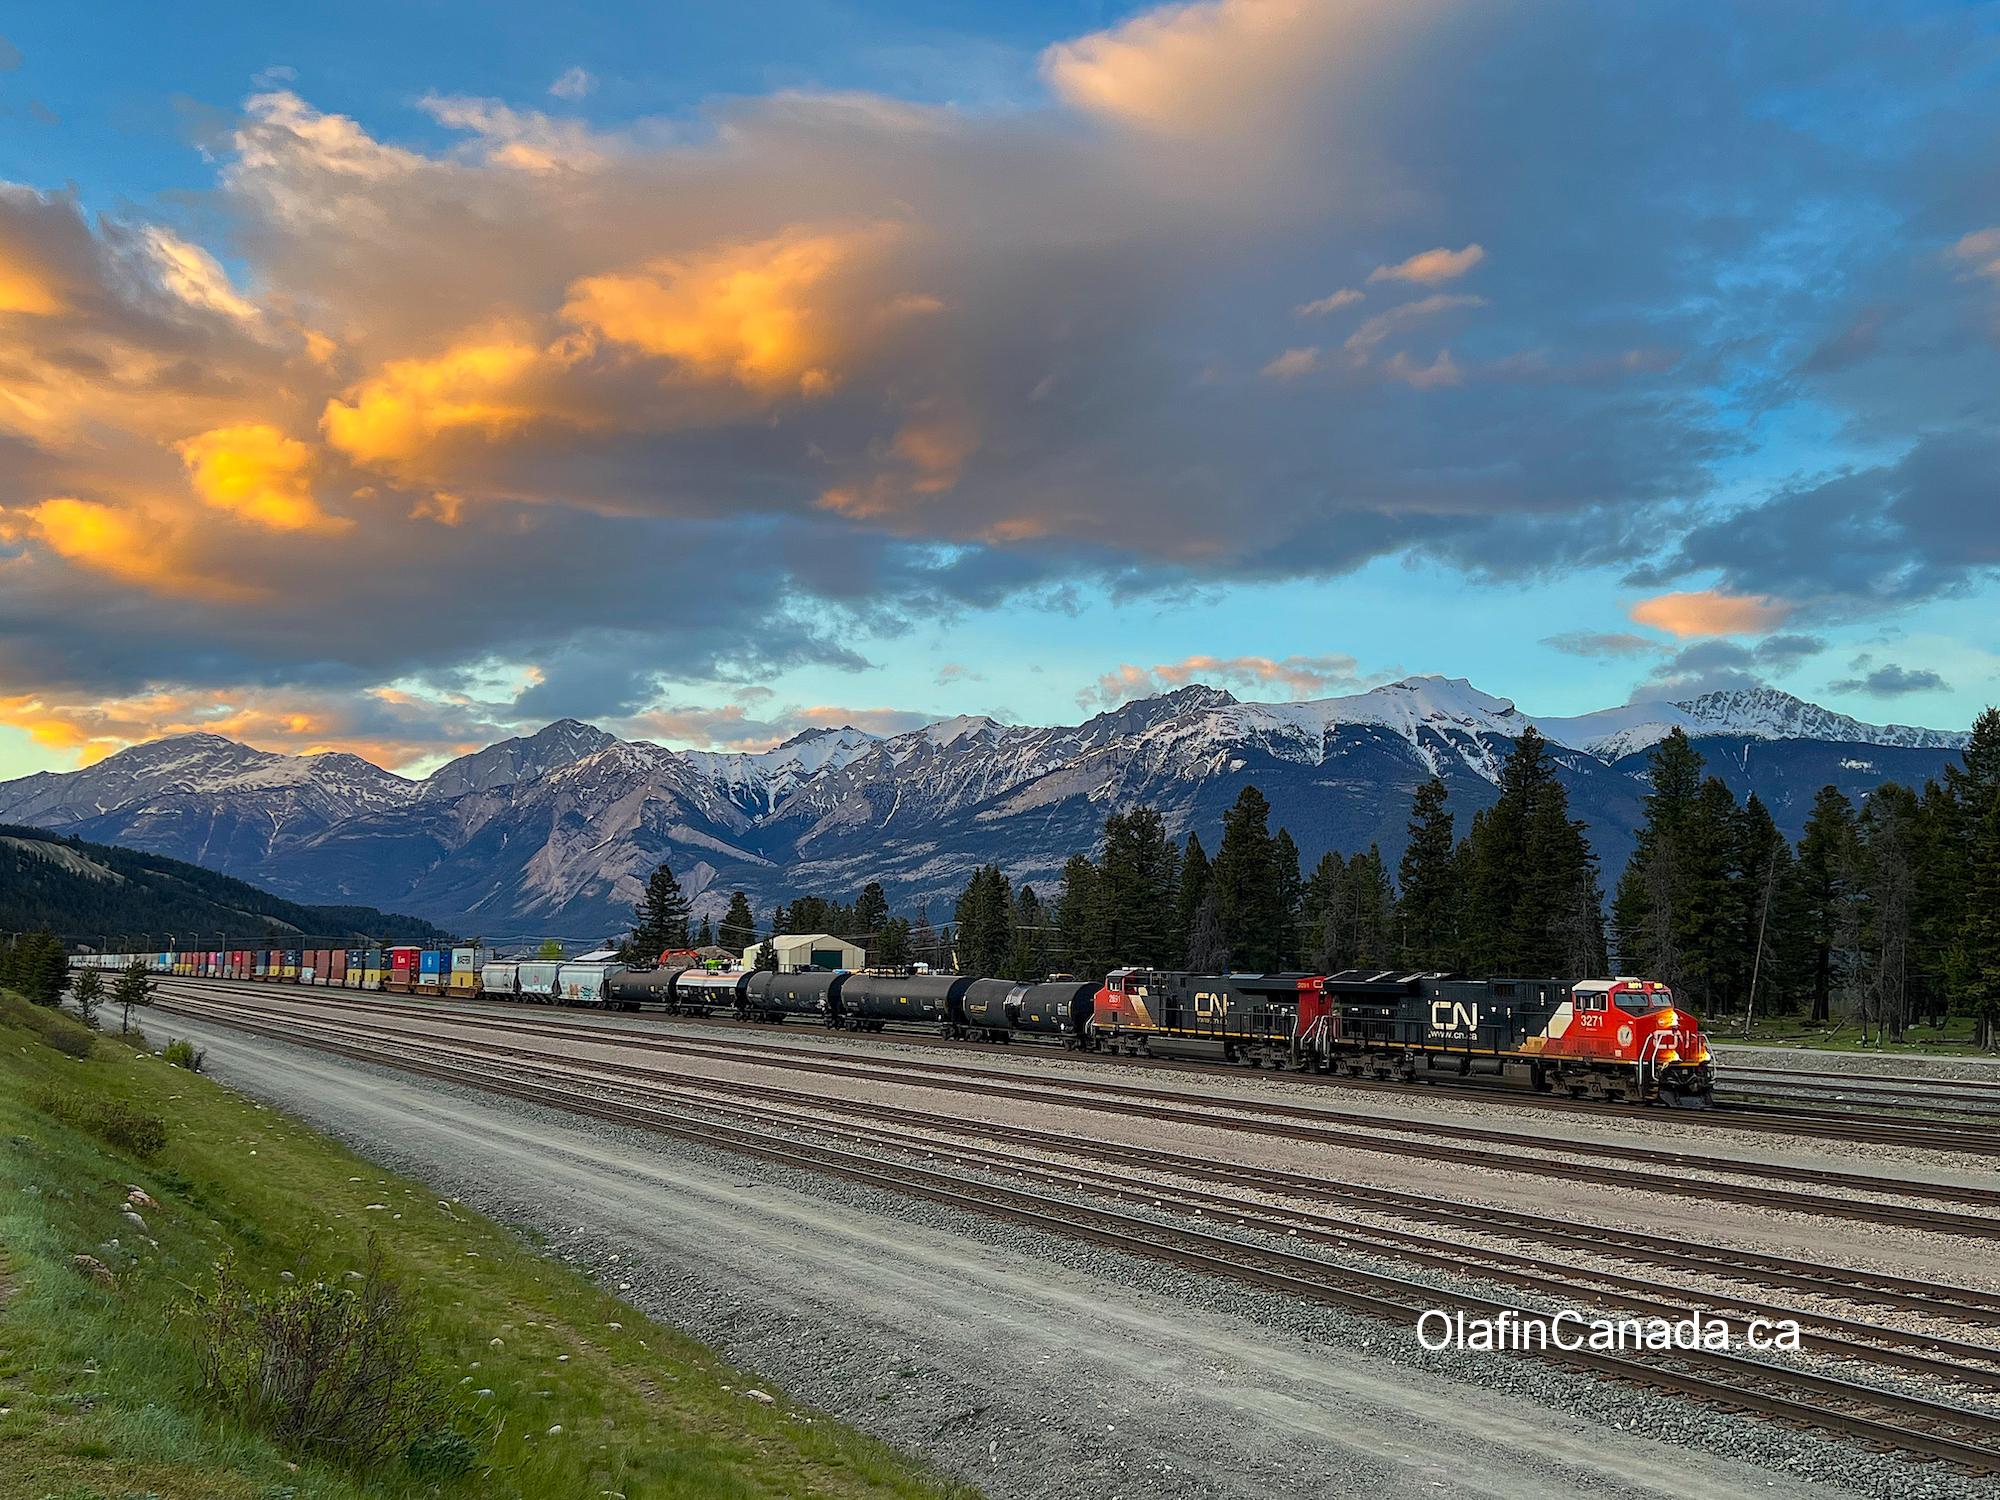 A long CN train enters the town of Jasper in the Rockies. #olafincanada #rockies #jasper #train